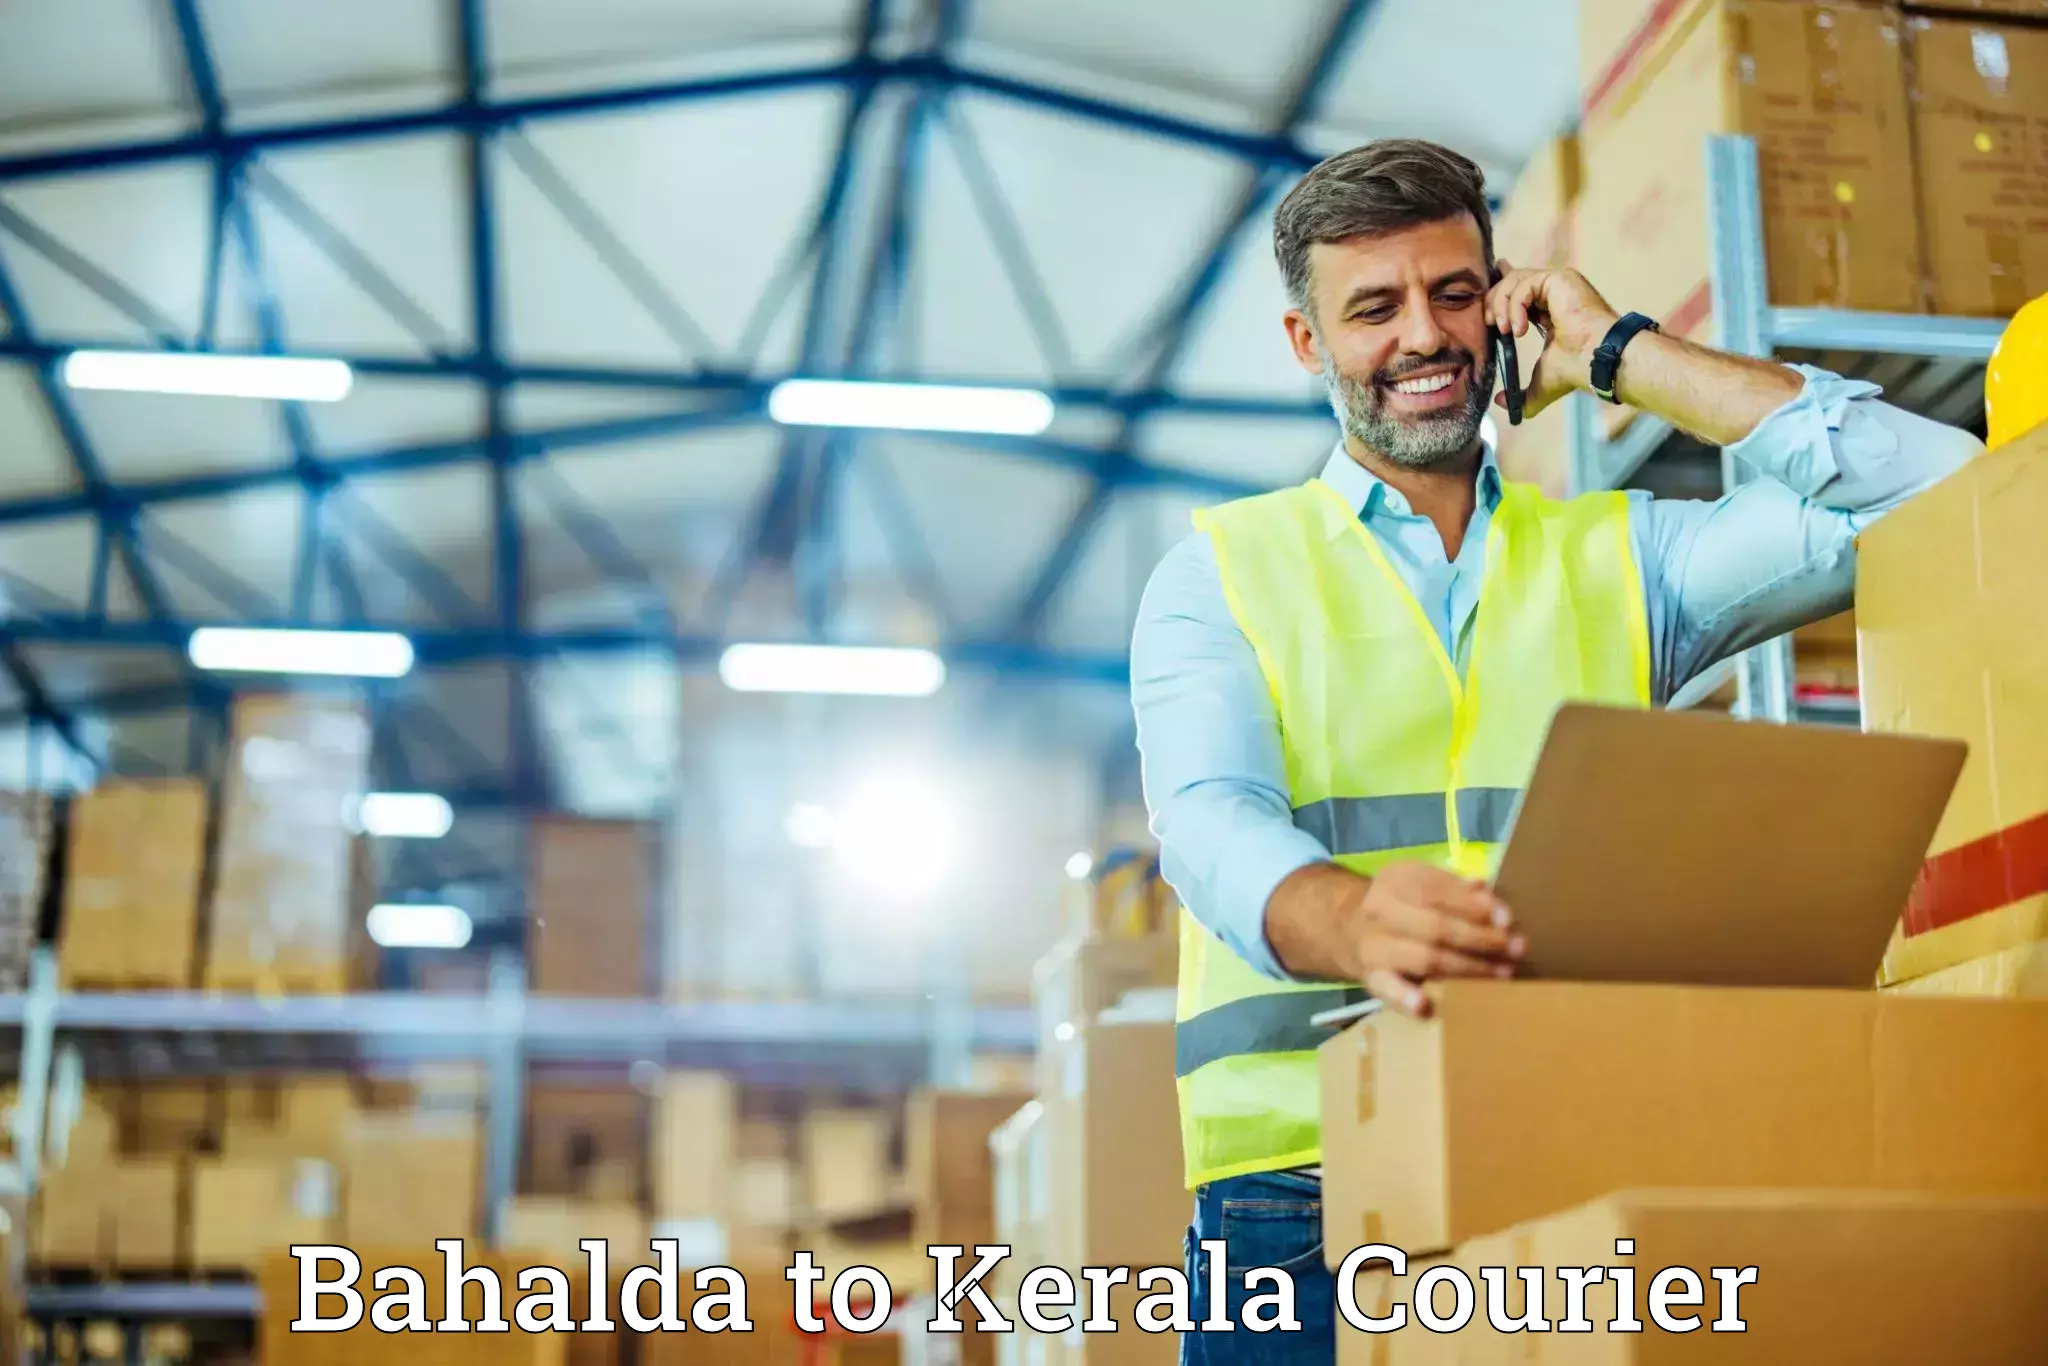 Furniture relocation experts Bahalda to Kerala